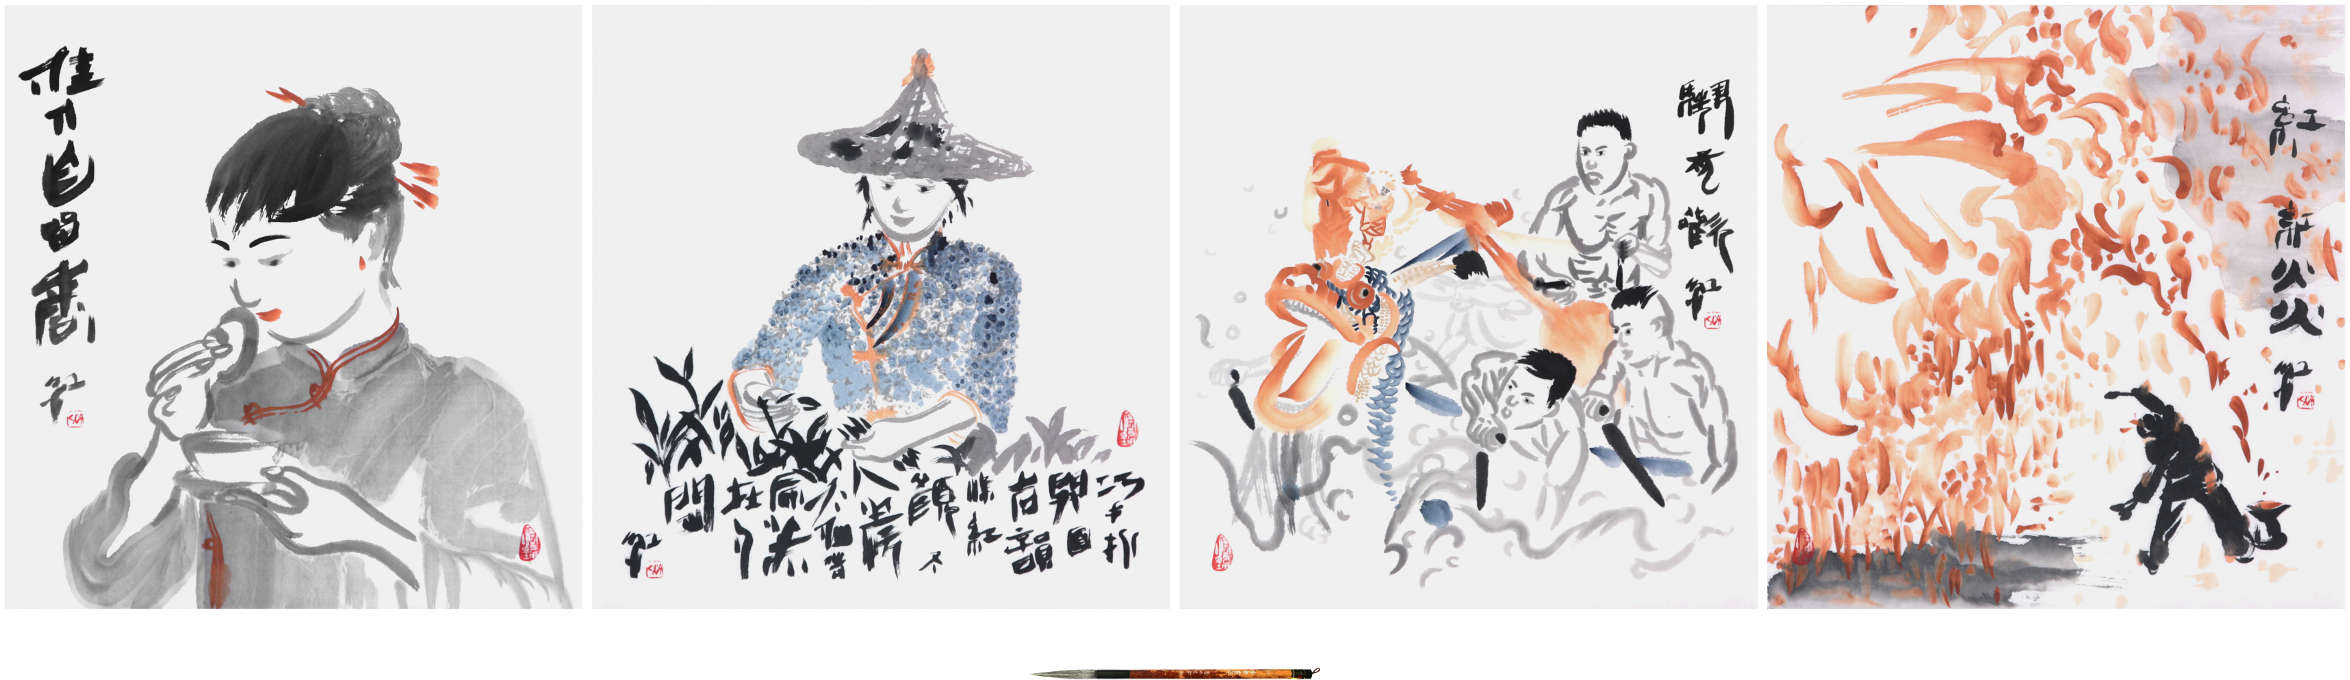 Sai Koh (Qi Hong)’s Freehand Brushwork Chinese Paintings: figure painting, literati painting, ink wash painting